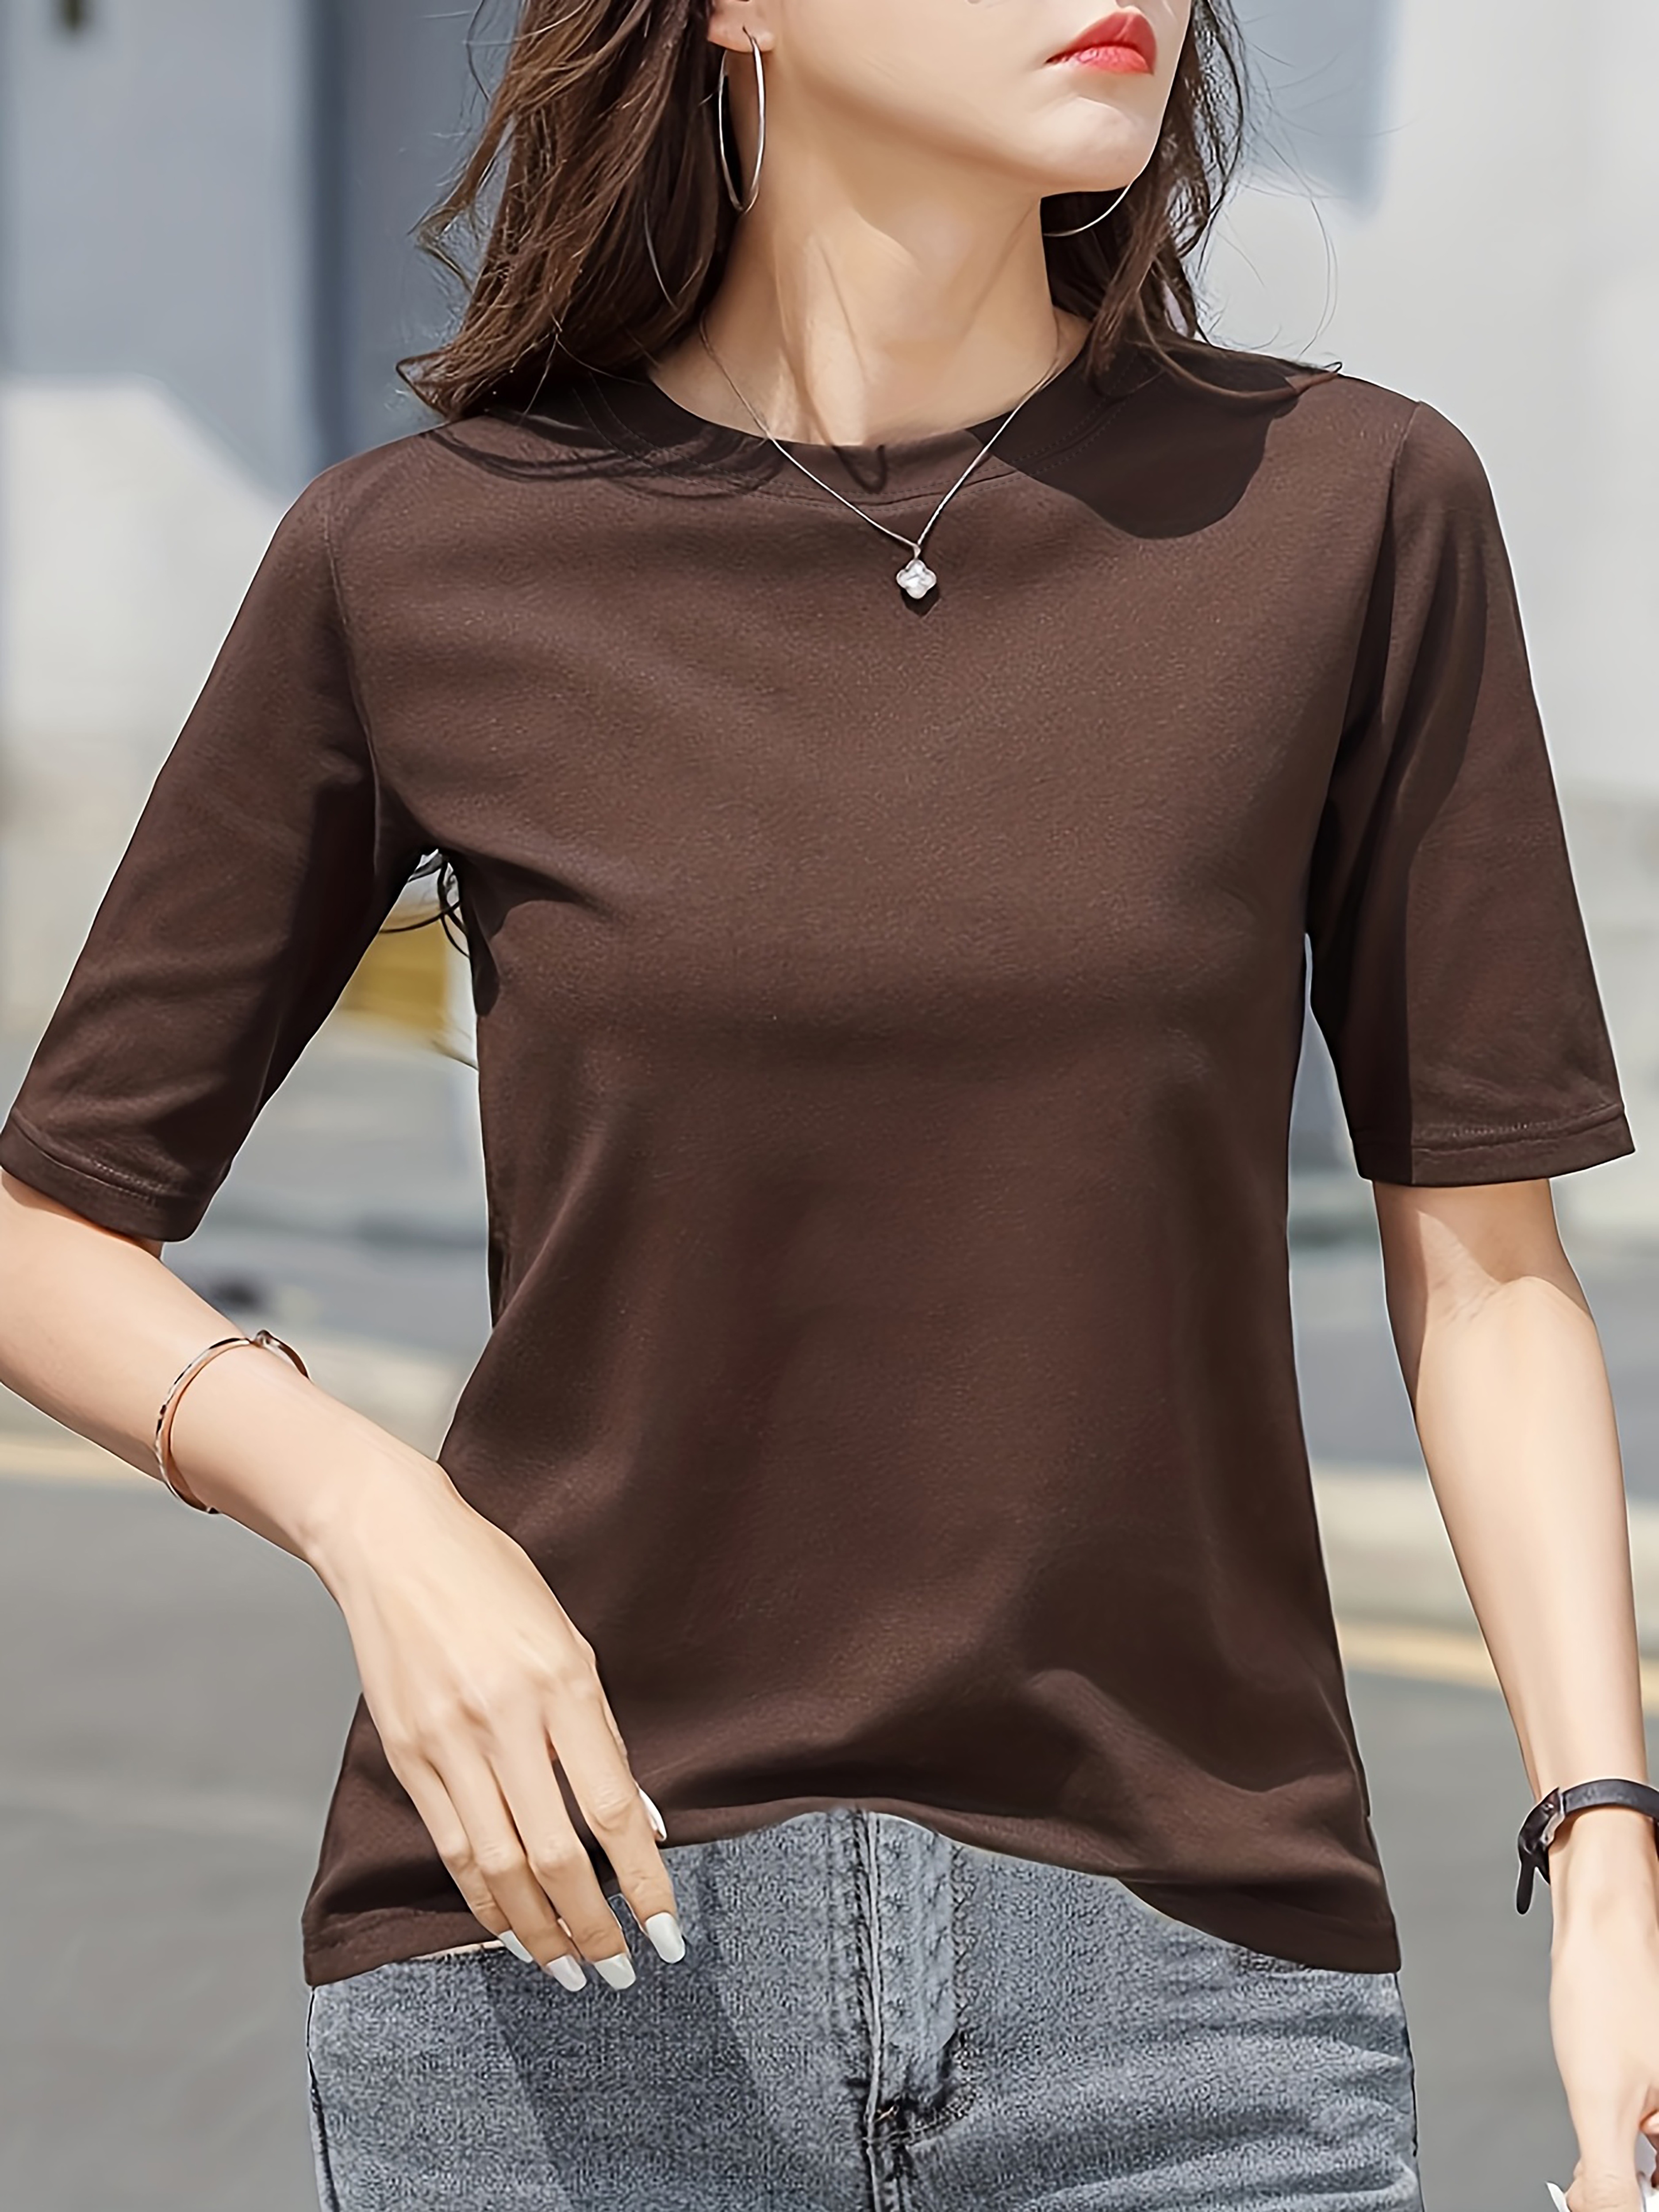 DOROSE Womens Short Sleeve Shirts for Women Casual Loose T-Shirt